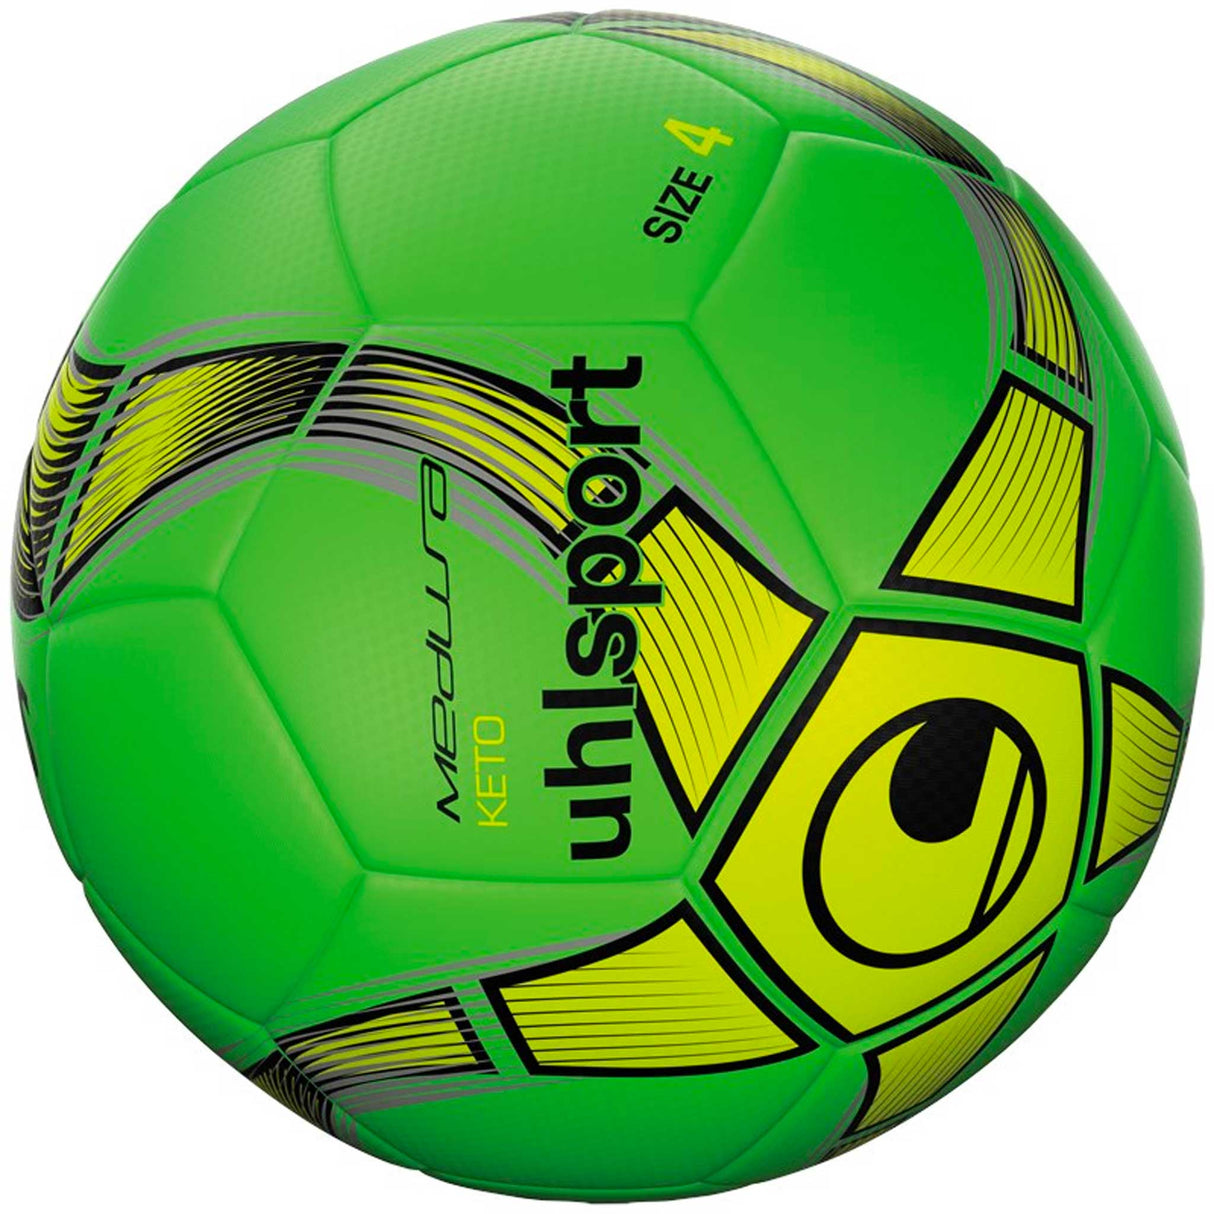 Uhlsport Medusa Keto Futsal ballon de soccer interieur